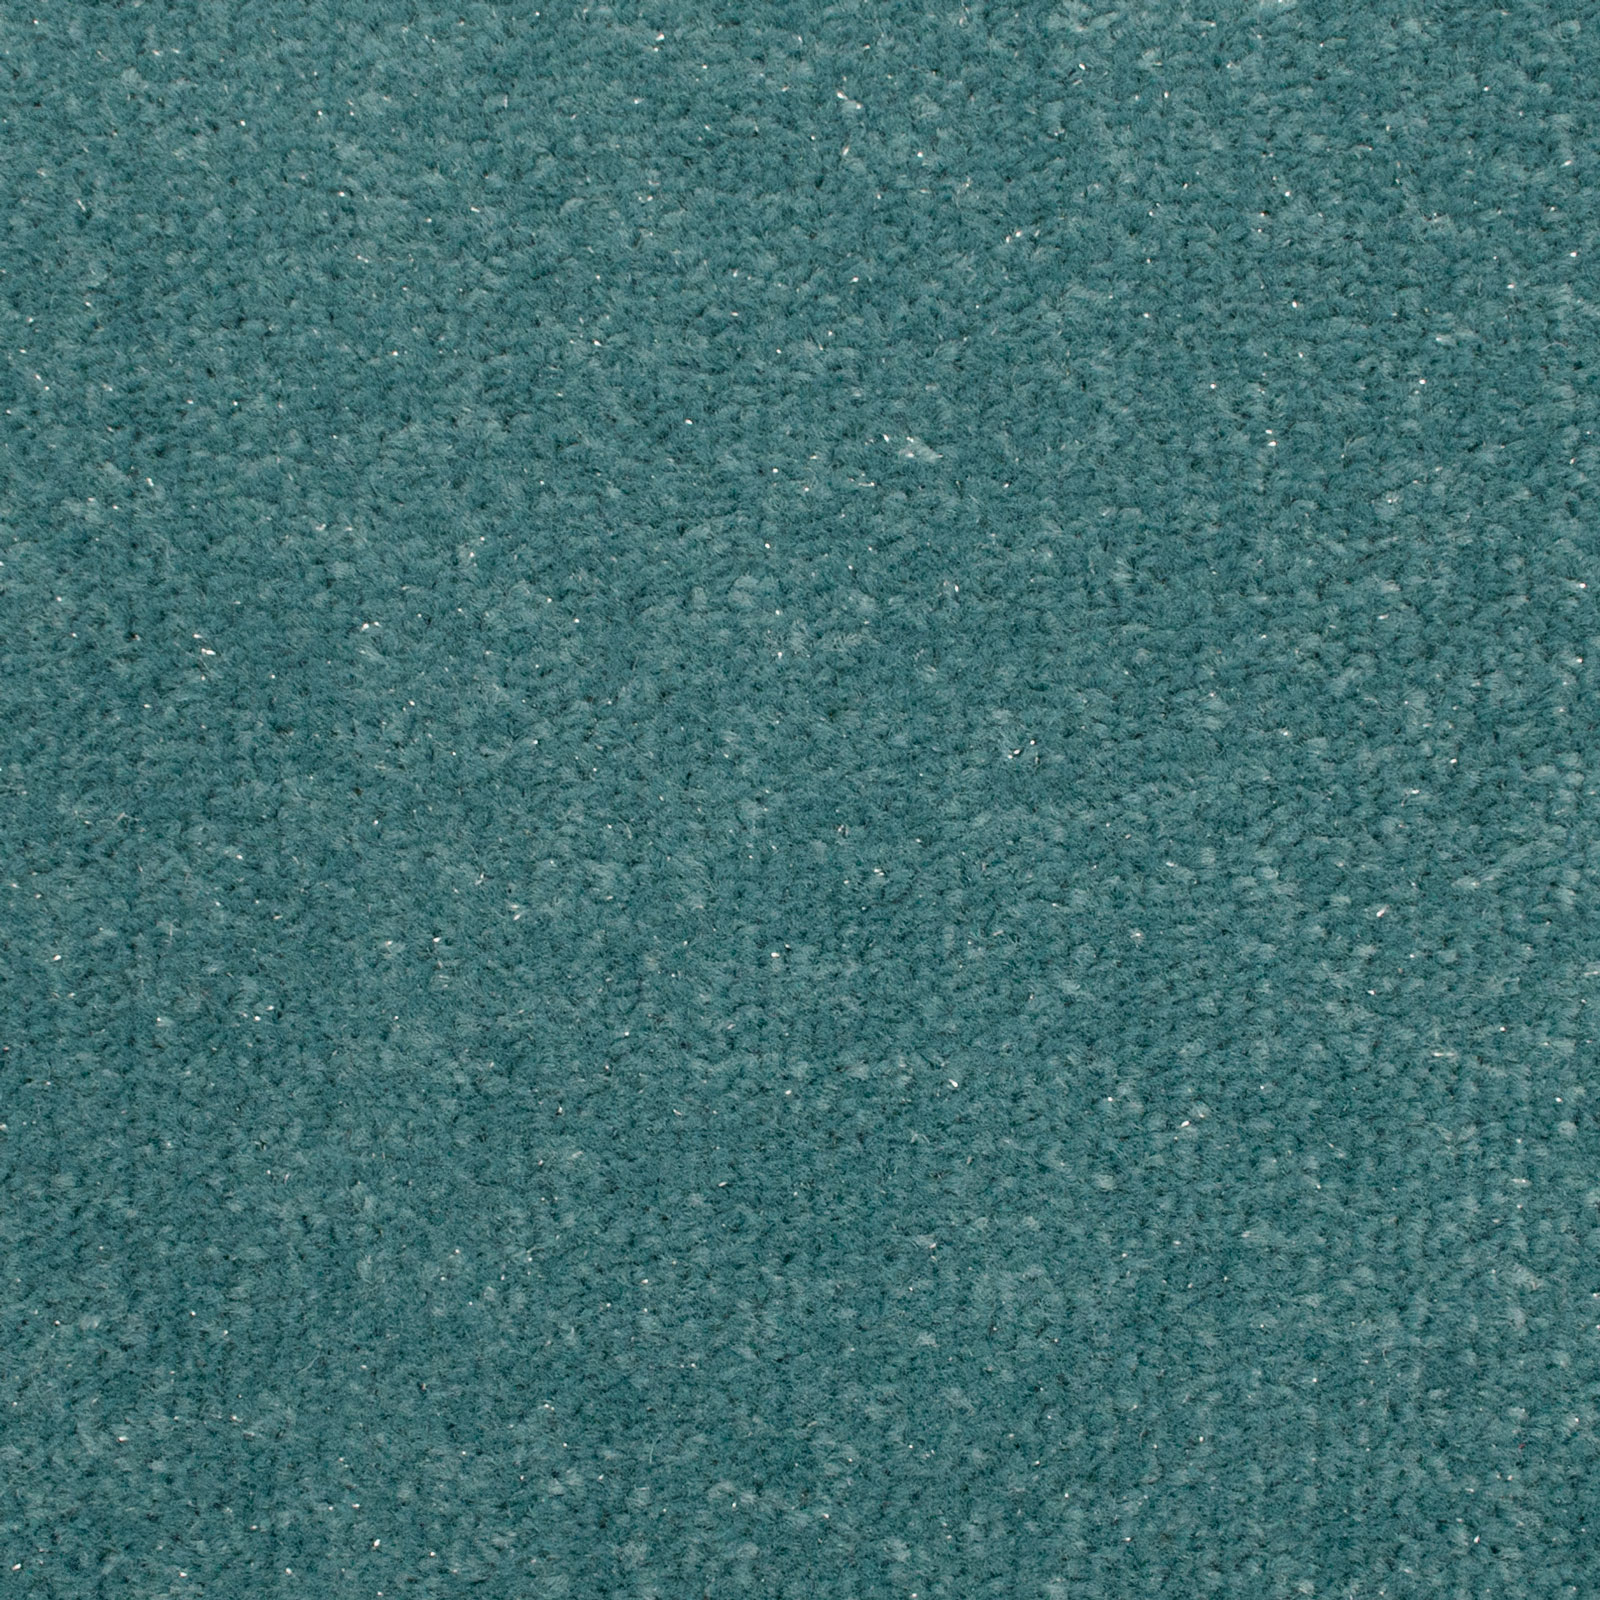 Teal Aqua Sparkly Twist Carpet